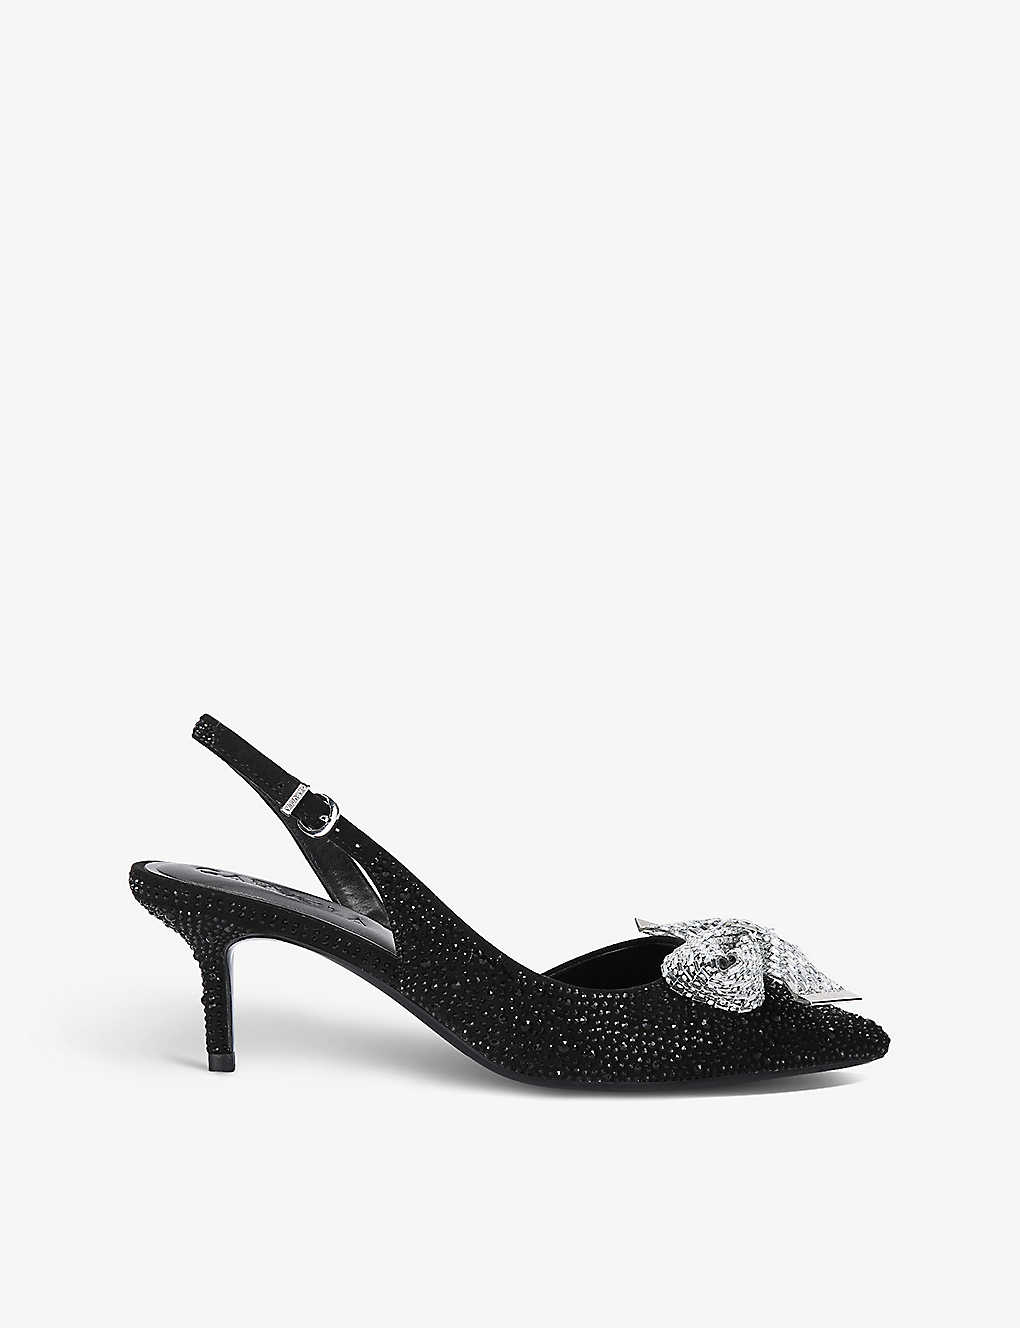 Carvela Womens Black Regal Bow-embellished Heeled Court Shoes